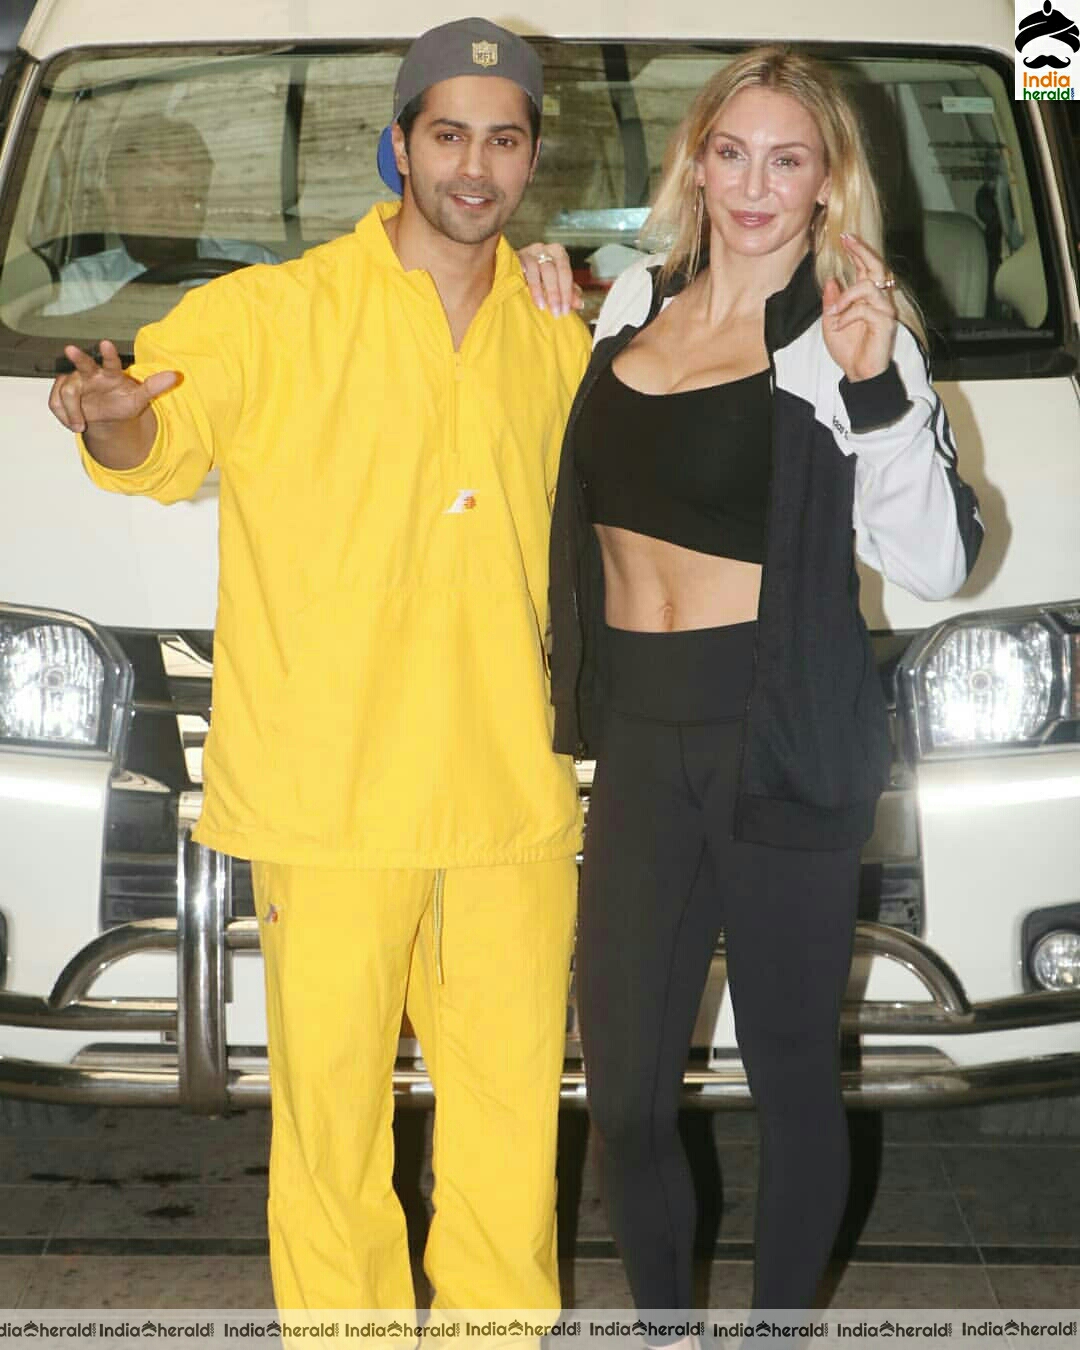 Varun Dhawan Spotted With International Wrestler Charlotte Flair In Mumbai